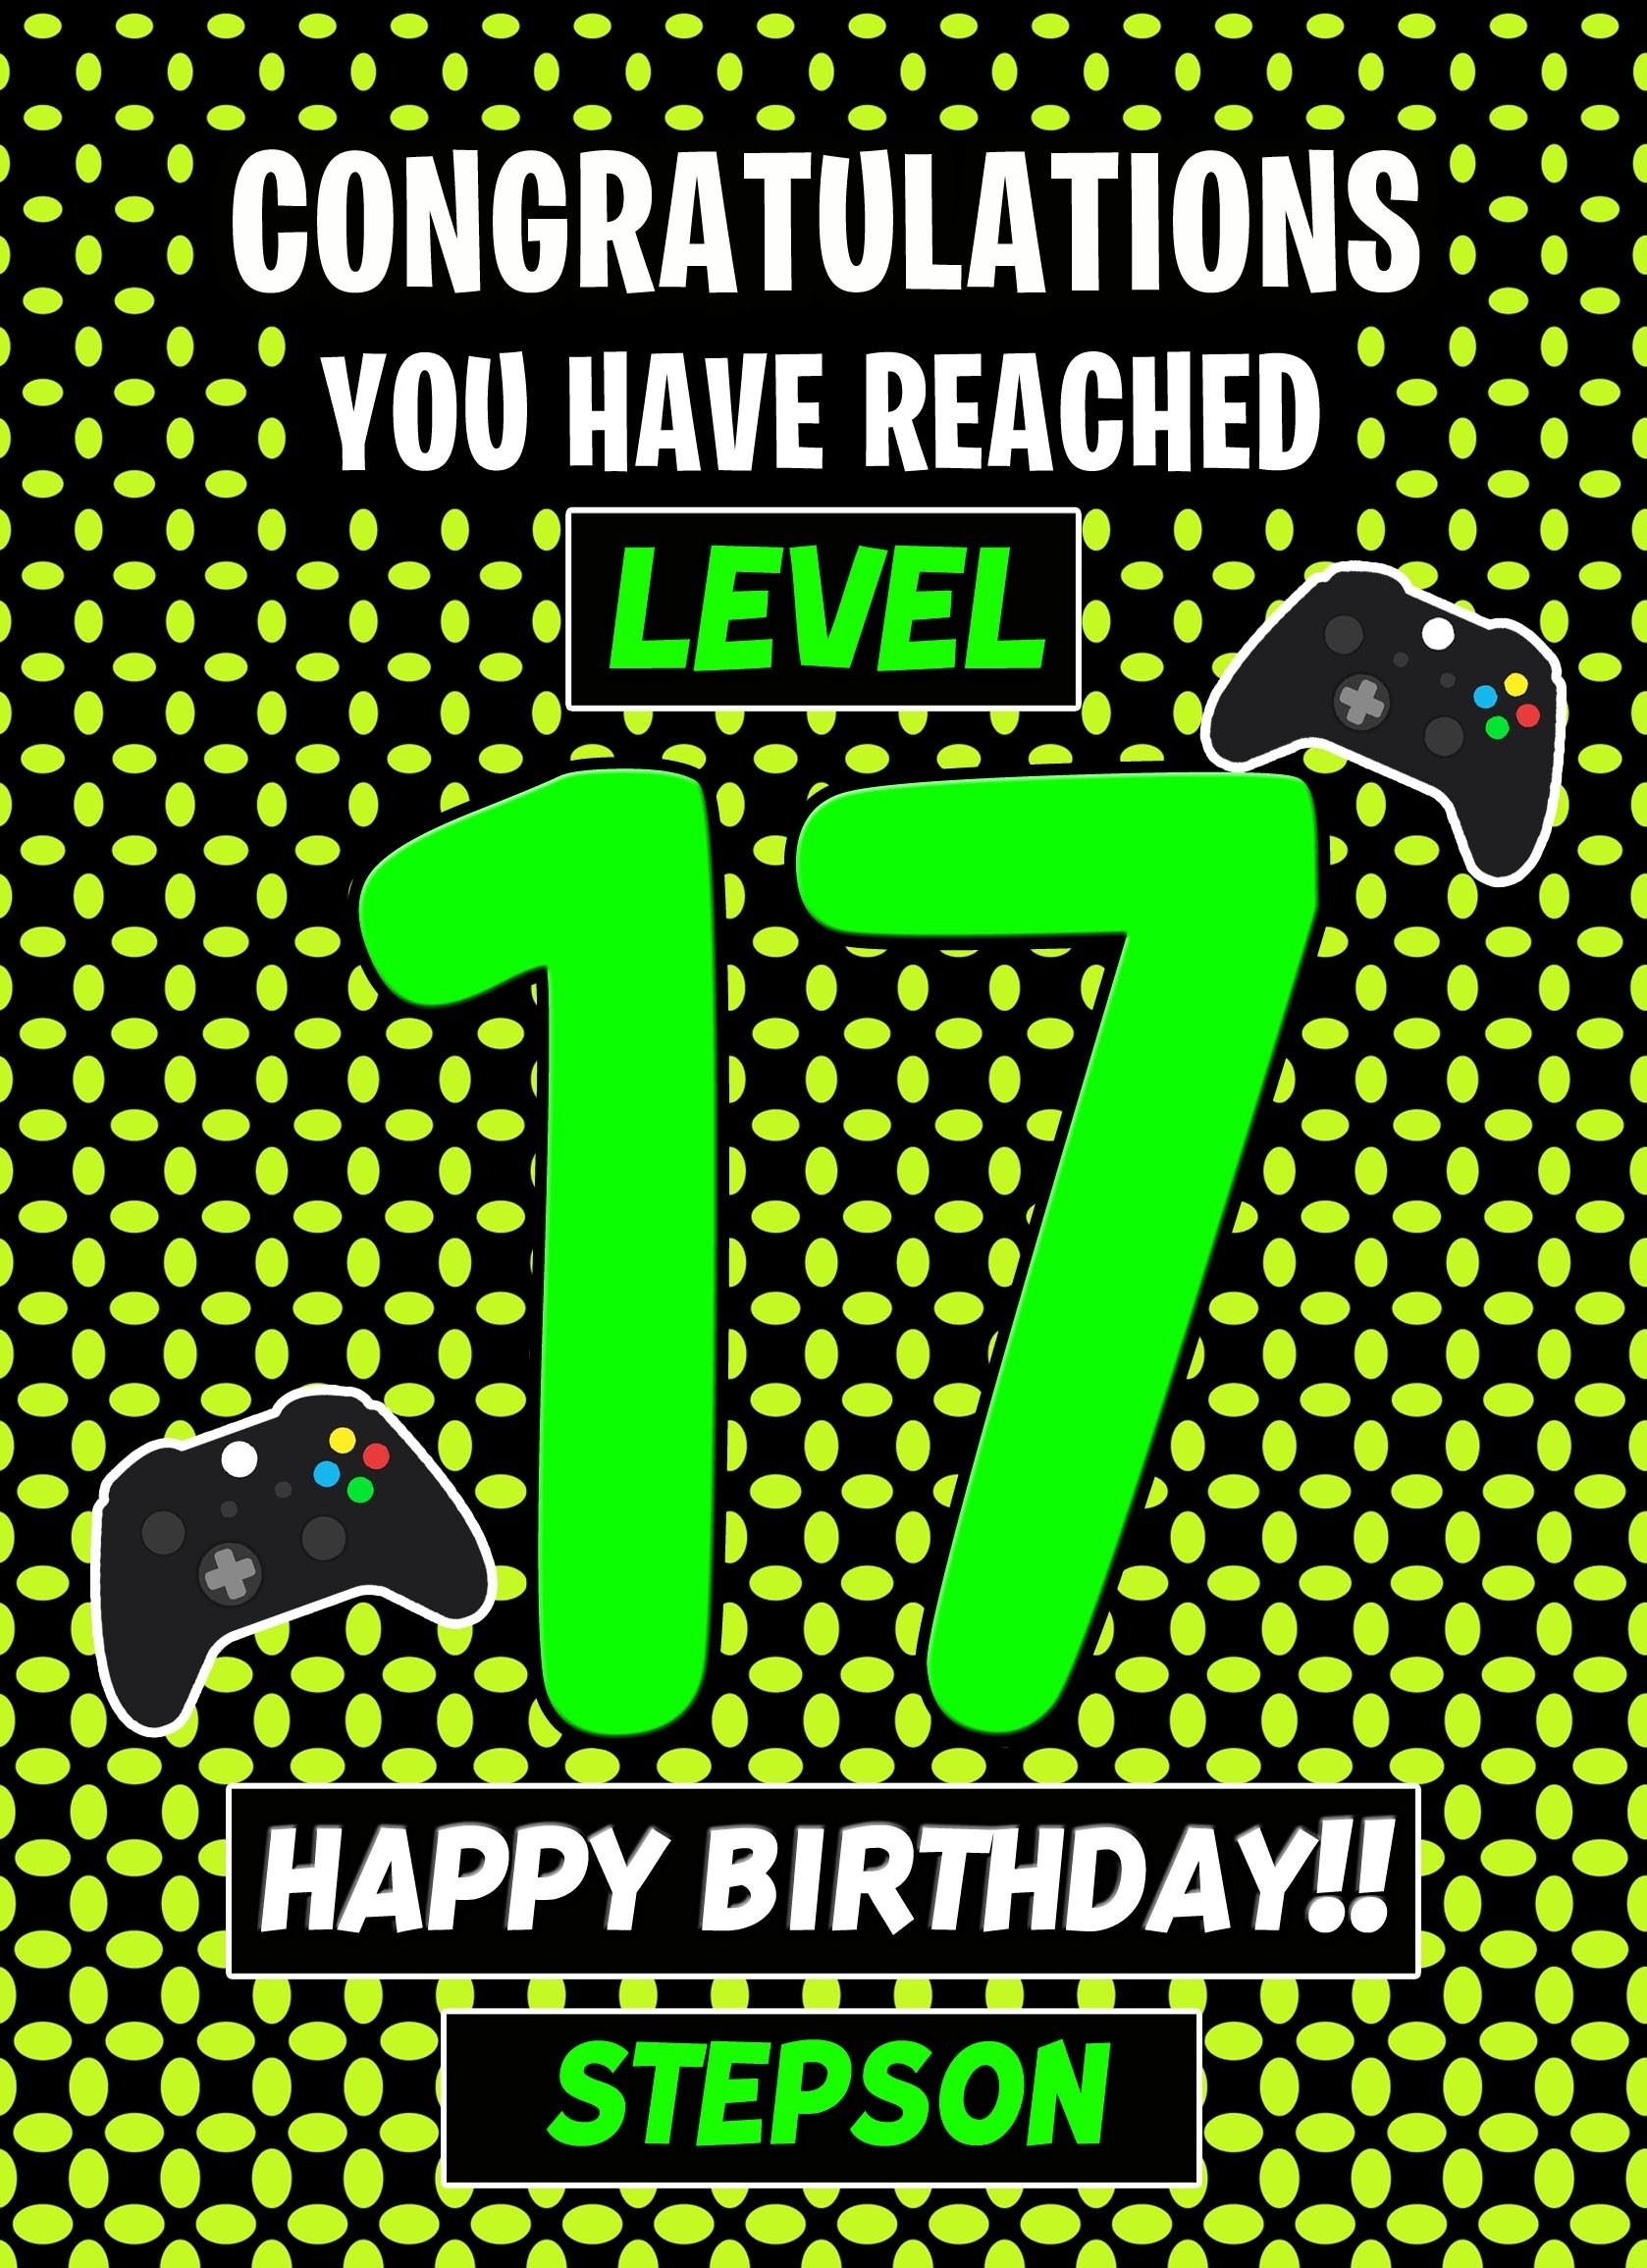 Stepson 17th Birthday Card (Level Up Gamer)